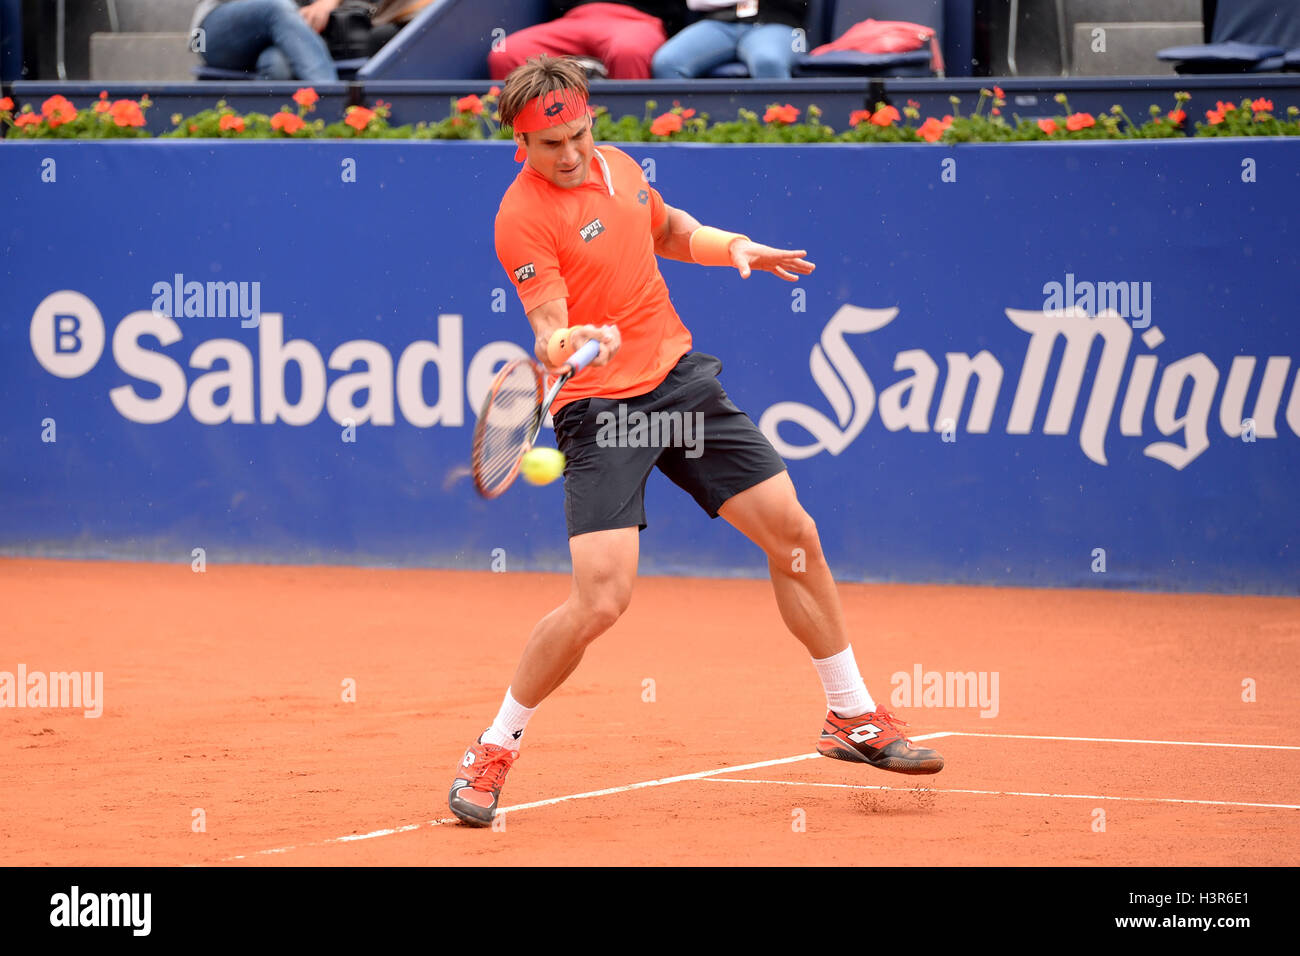 BARCELONA - APR 22: David Ferrer (Spanish tennis player) plays at the ATP Barcelona Open Banc Sabadell. Stock Photo